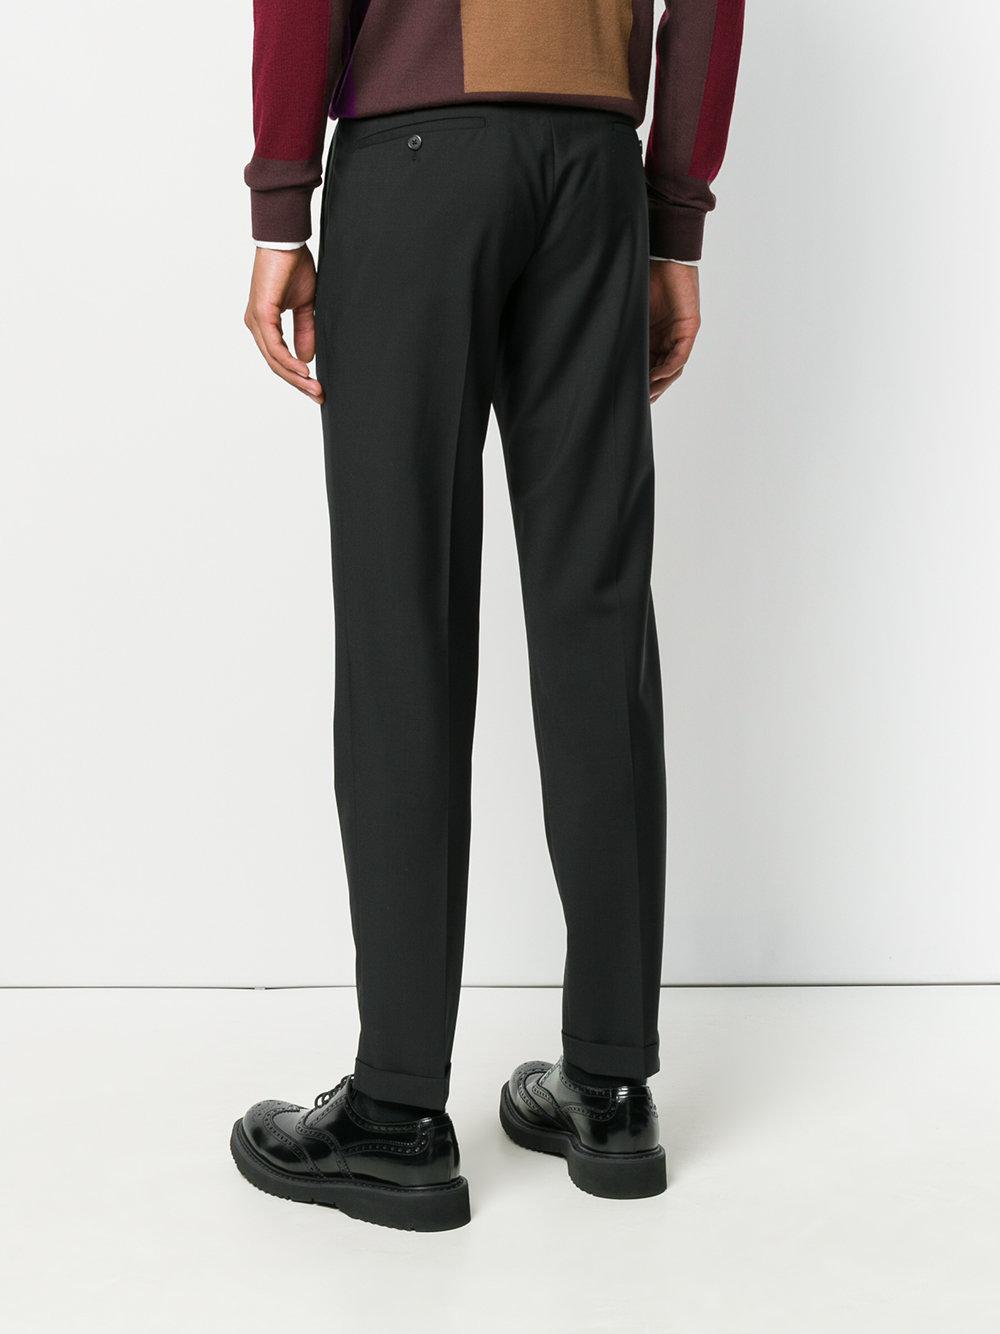 Prada Cuffed Tailored Trousers in Black for Men - Lyst